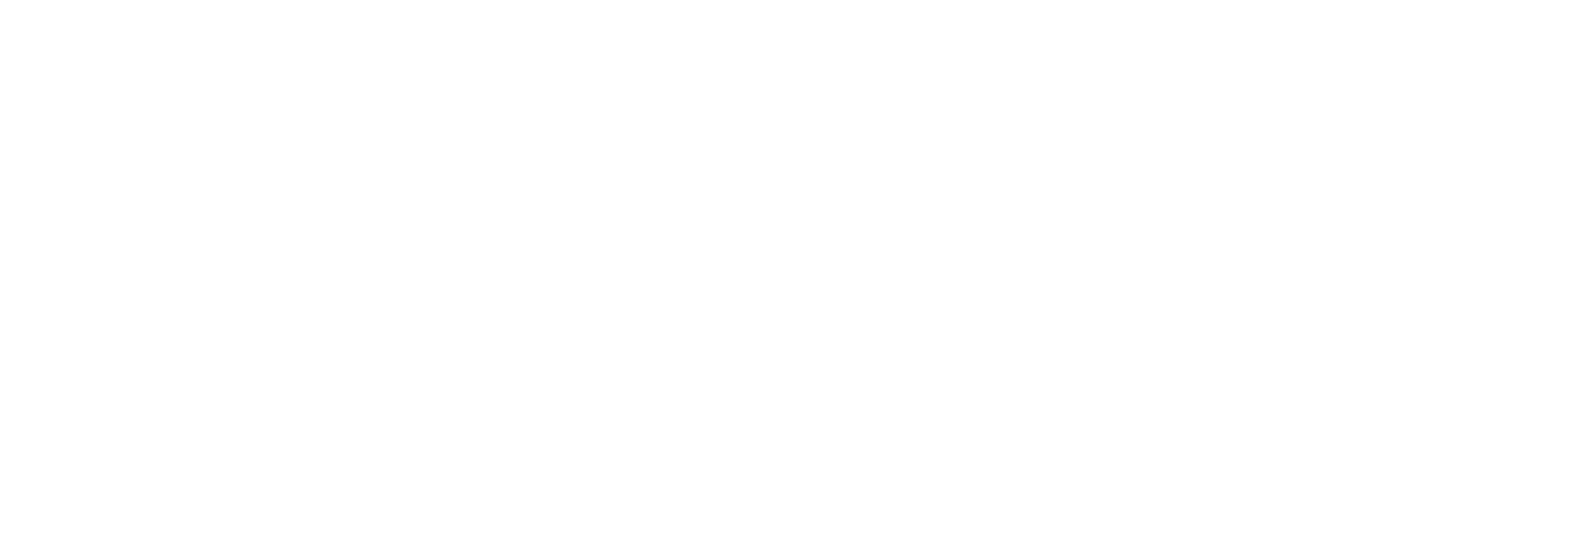 Aeterna Zentaris logo grand pour les fonds sombres (PNG transparent)